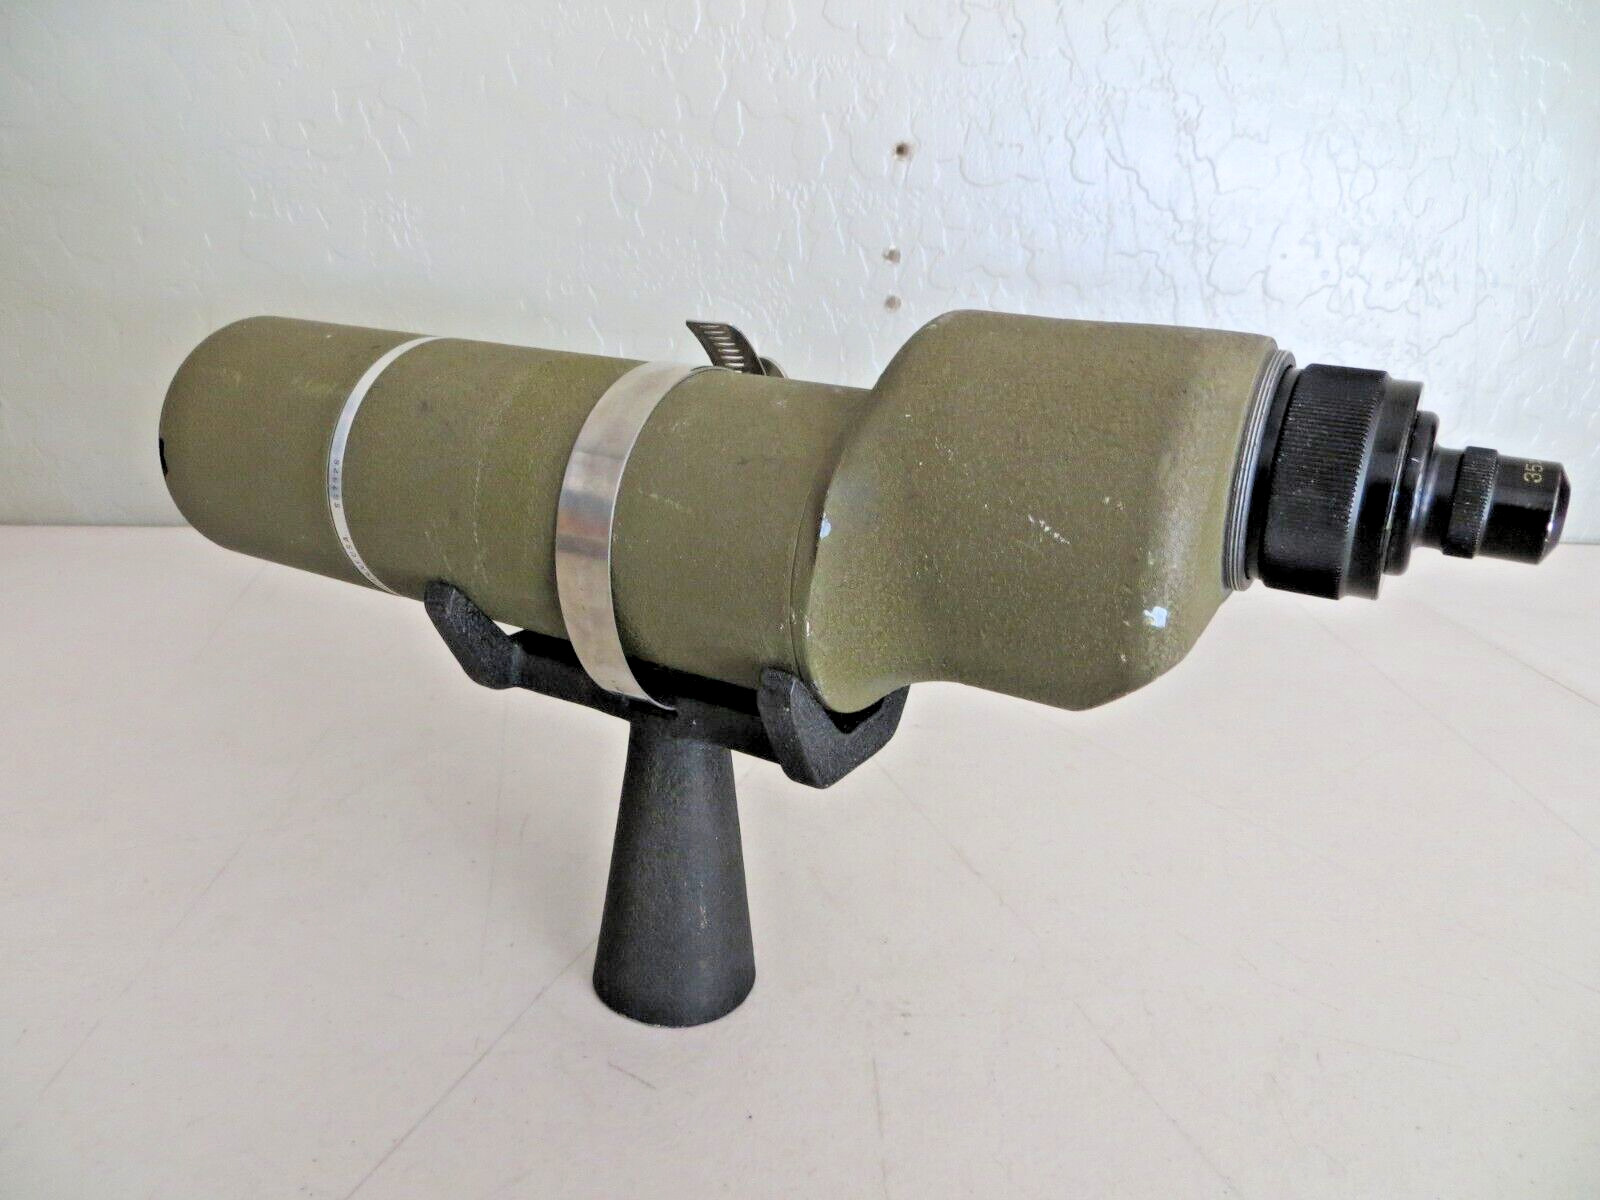 WW2 Bausch & Lomb Spotting Scope 35x M48 Optics Sniper Tripod Mount Type US Army